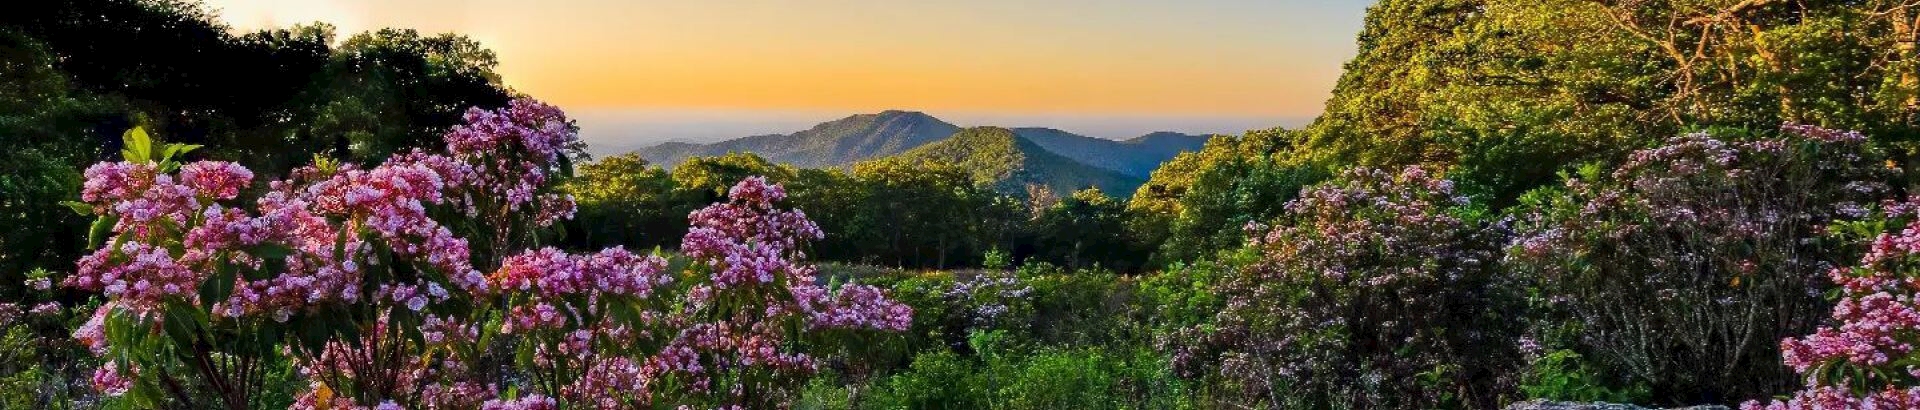 Shenandoah -- Virginia’s first national park